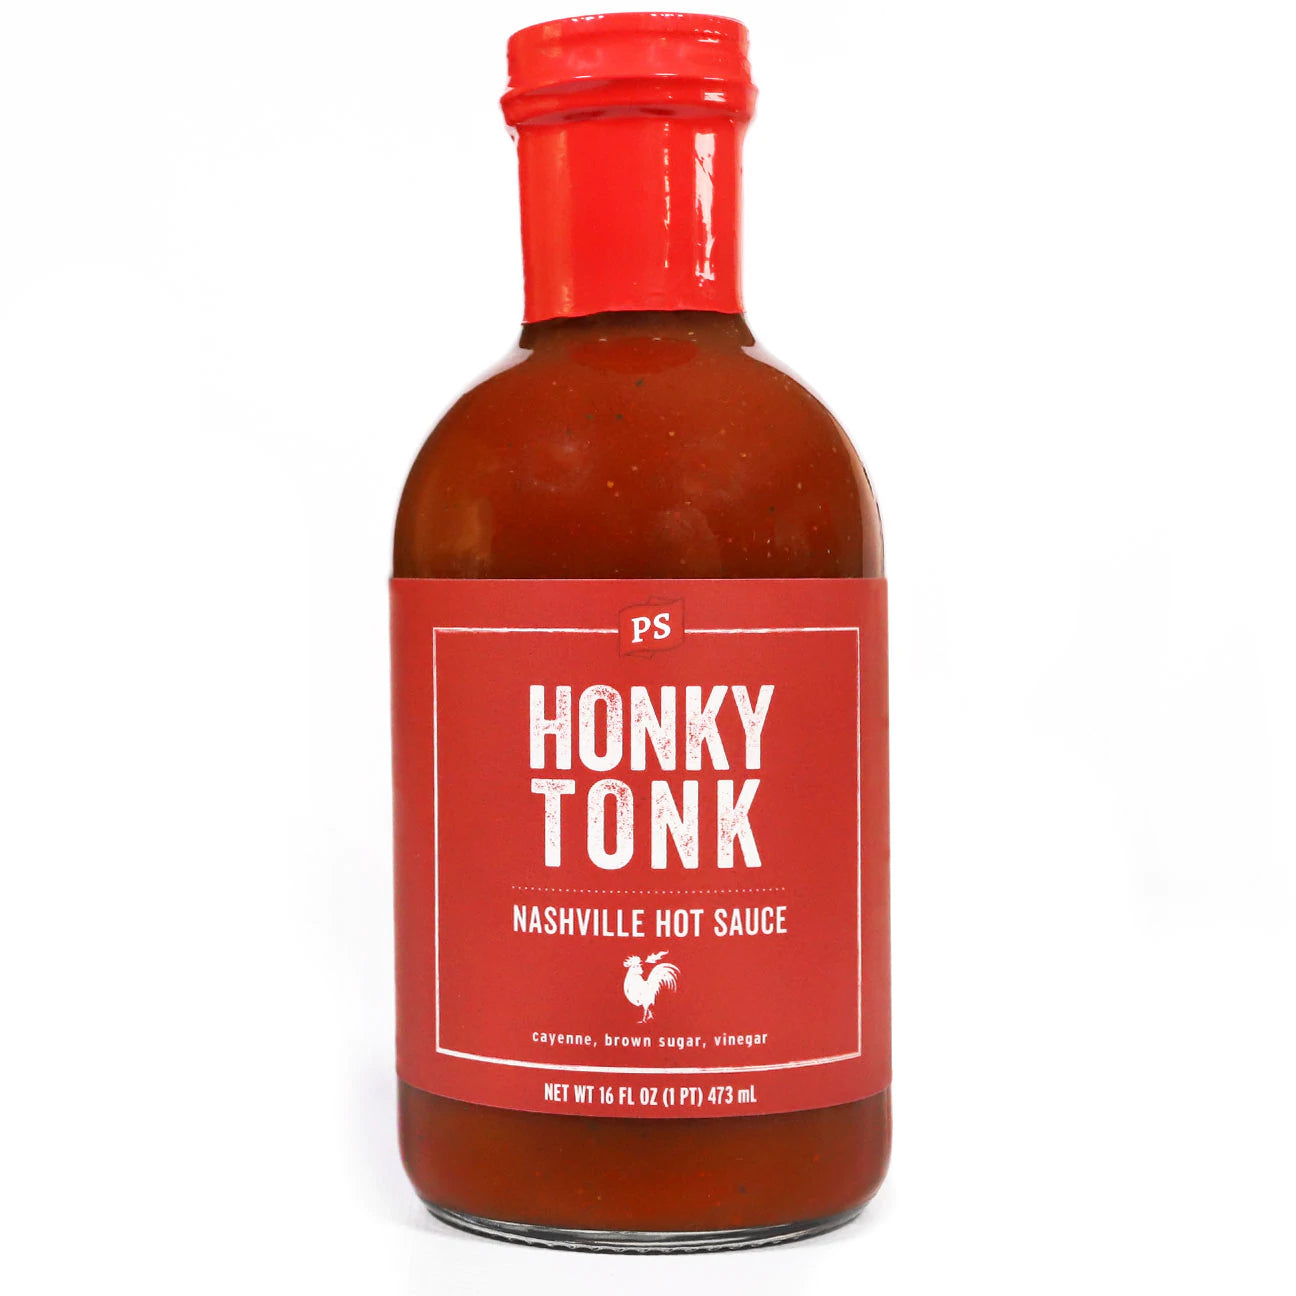 Honky Tonk Nashville Hot Sauce